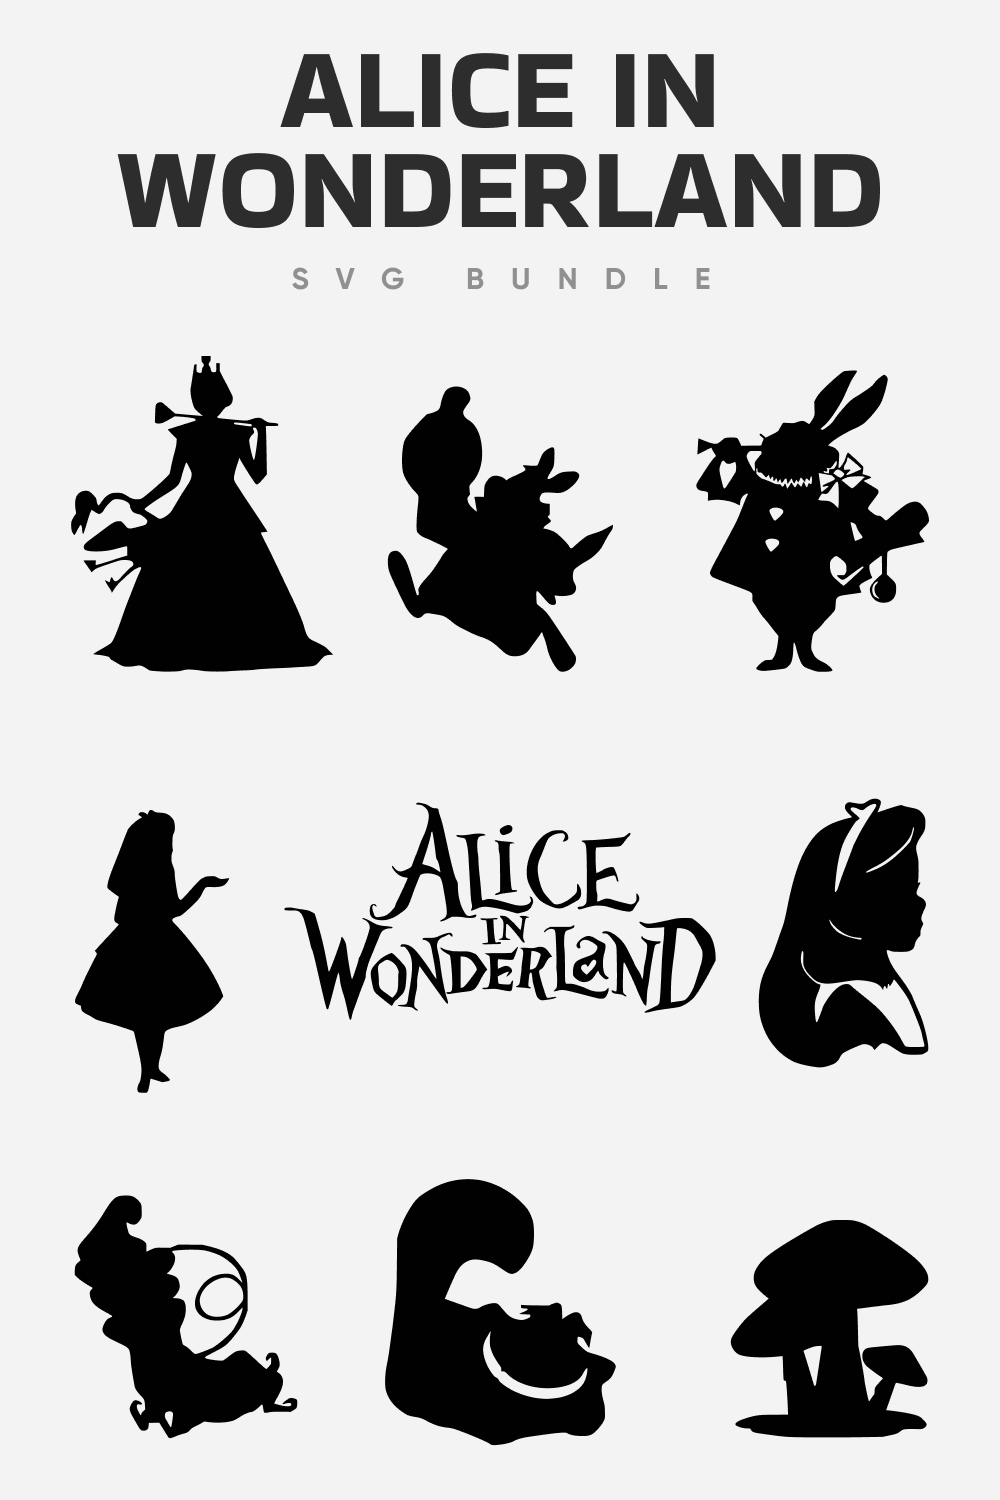 Alice in wonderland SVG.